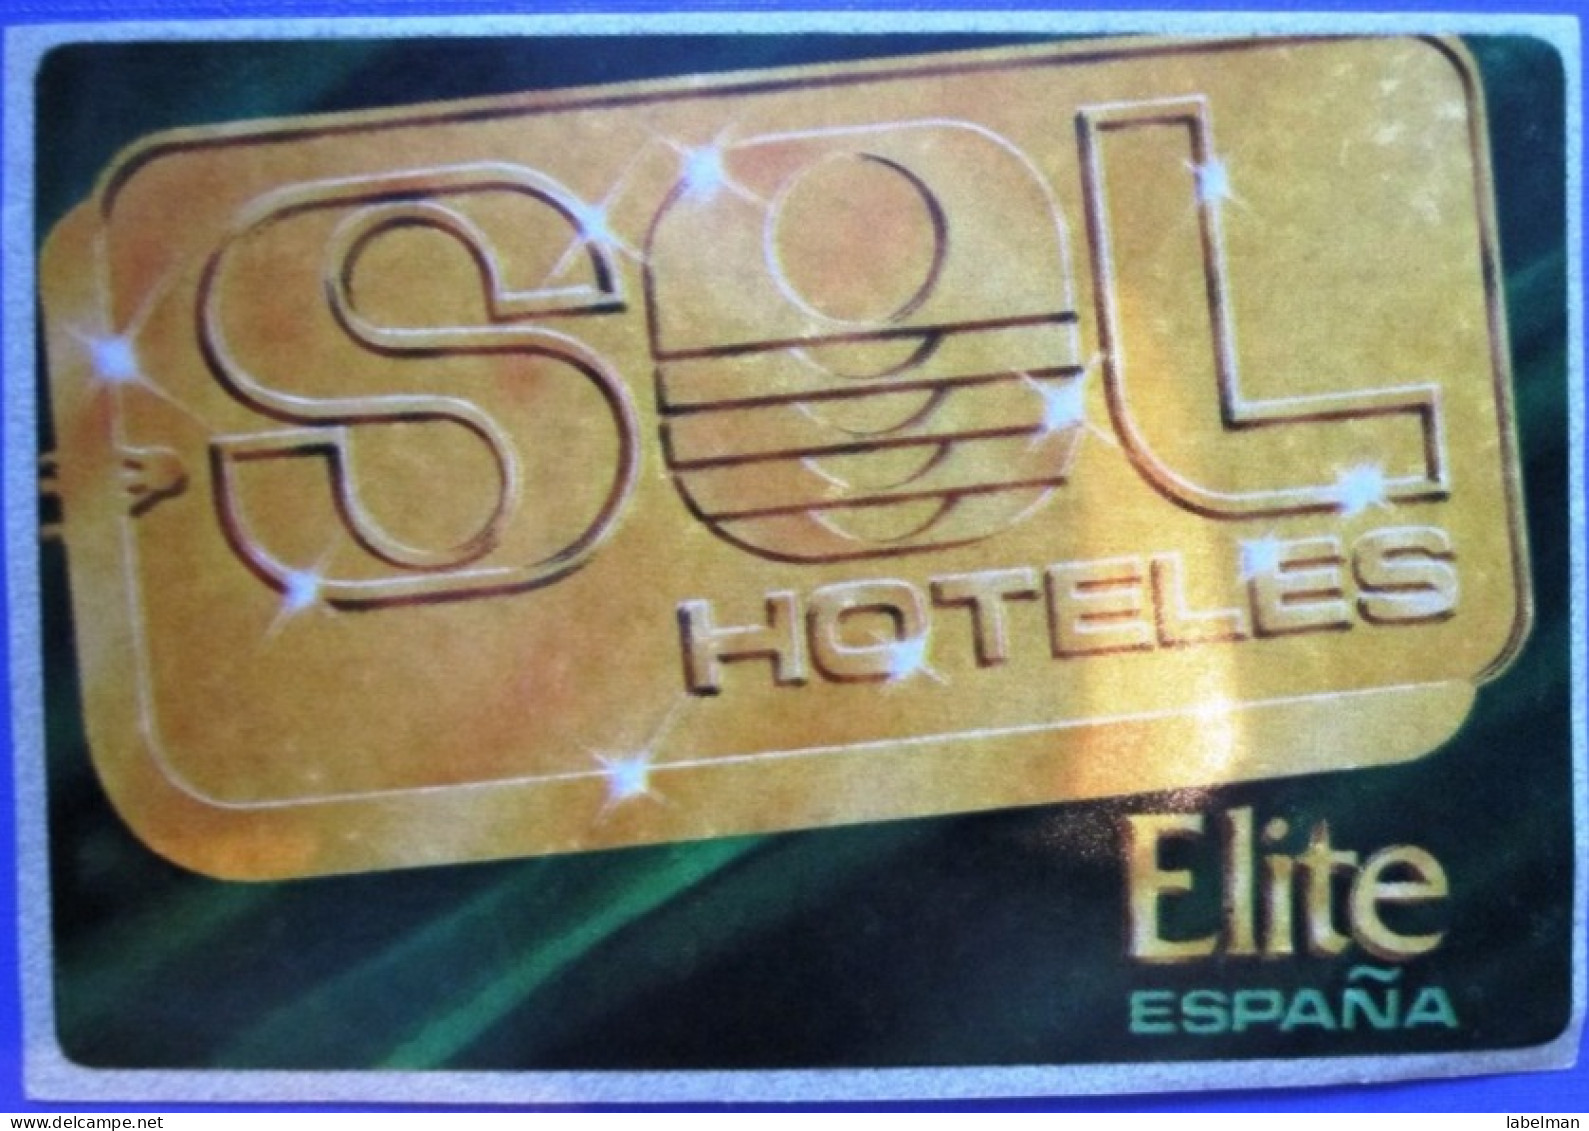 HOTEL RESIDENCIA PENSION HOSTAL MOTEL SOL HOTELES SPAIN LUGGAGE LABEL ETIQUETTE AUFKLEBER DECAL STICKER MADRID - Adesivi Di Alberghi